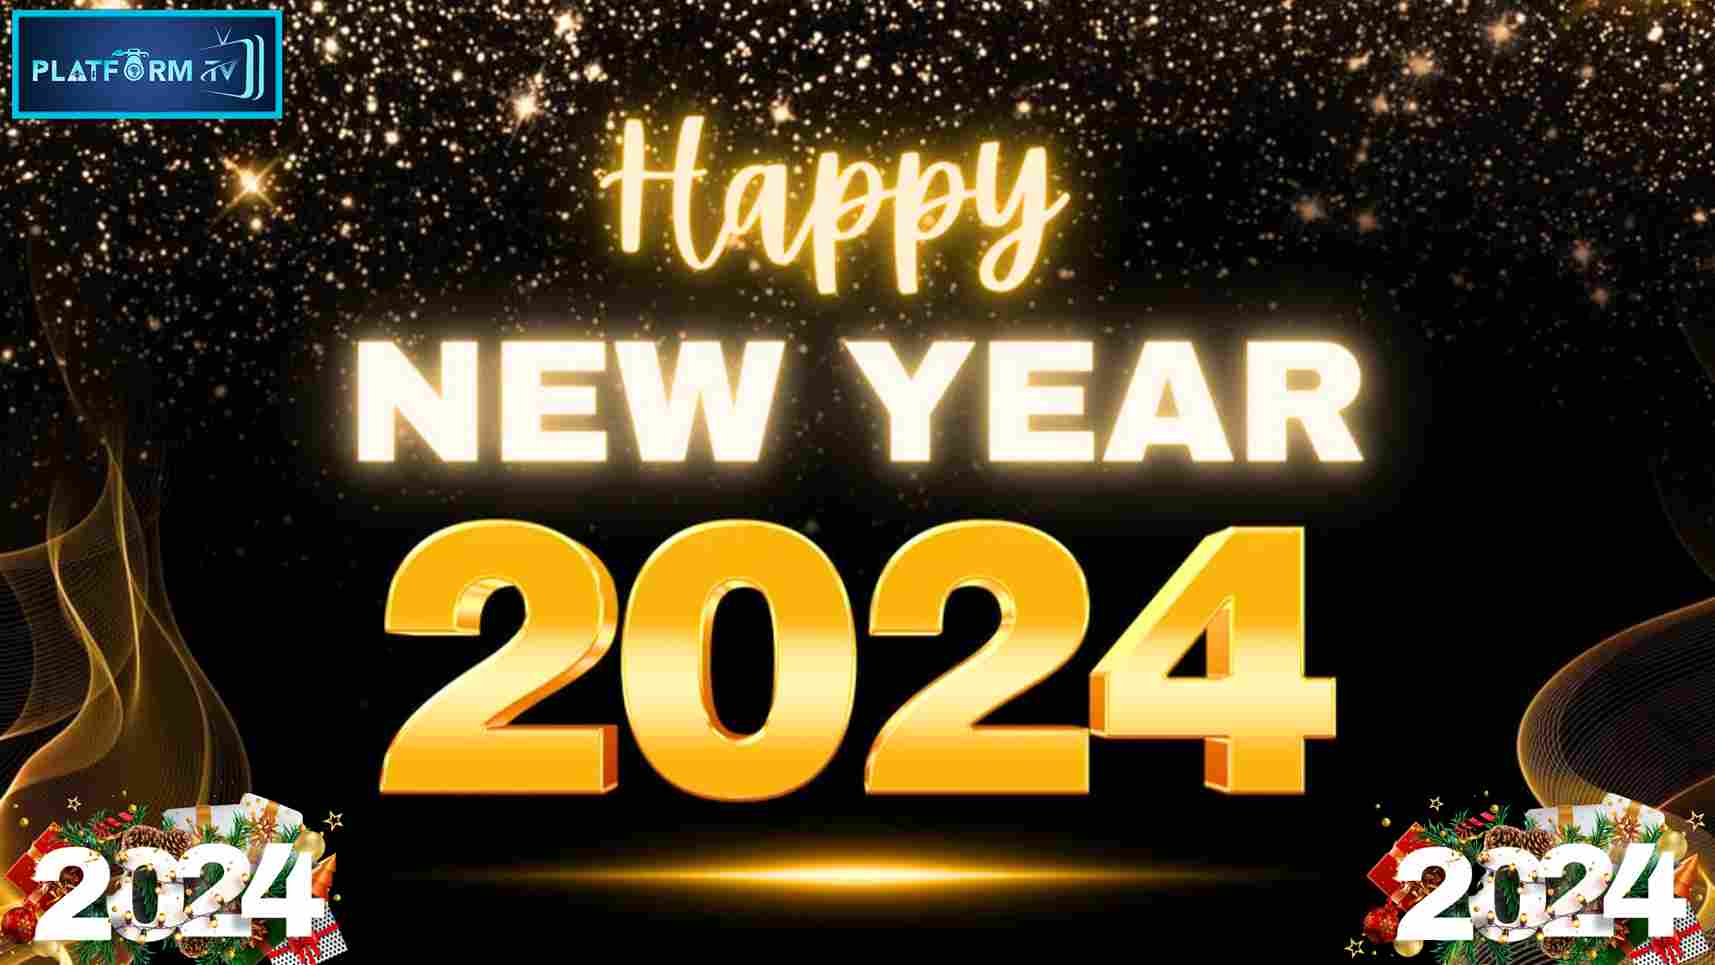 Happy New Year 2024 - Platform Tamil